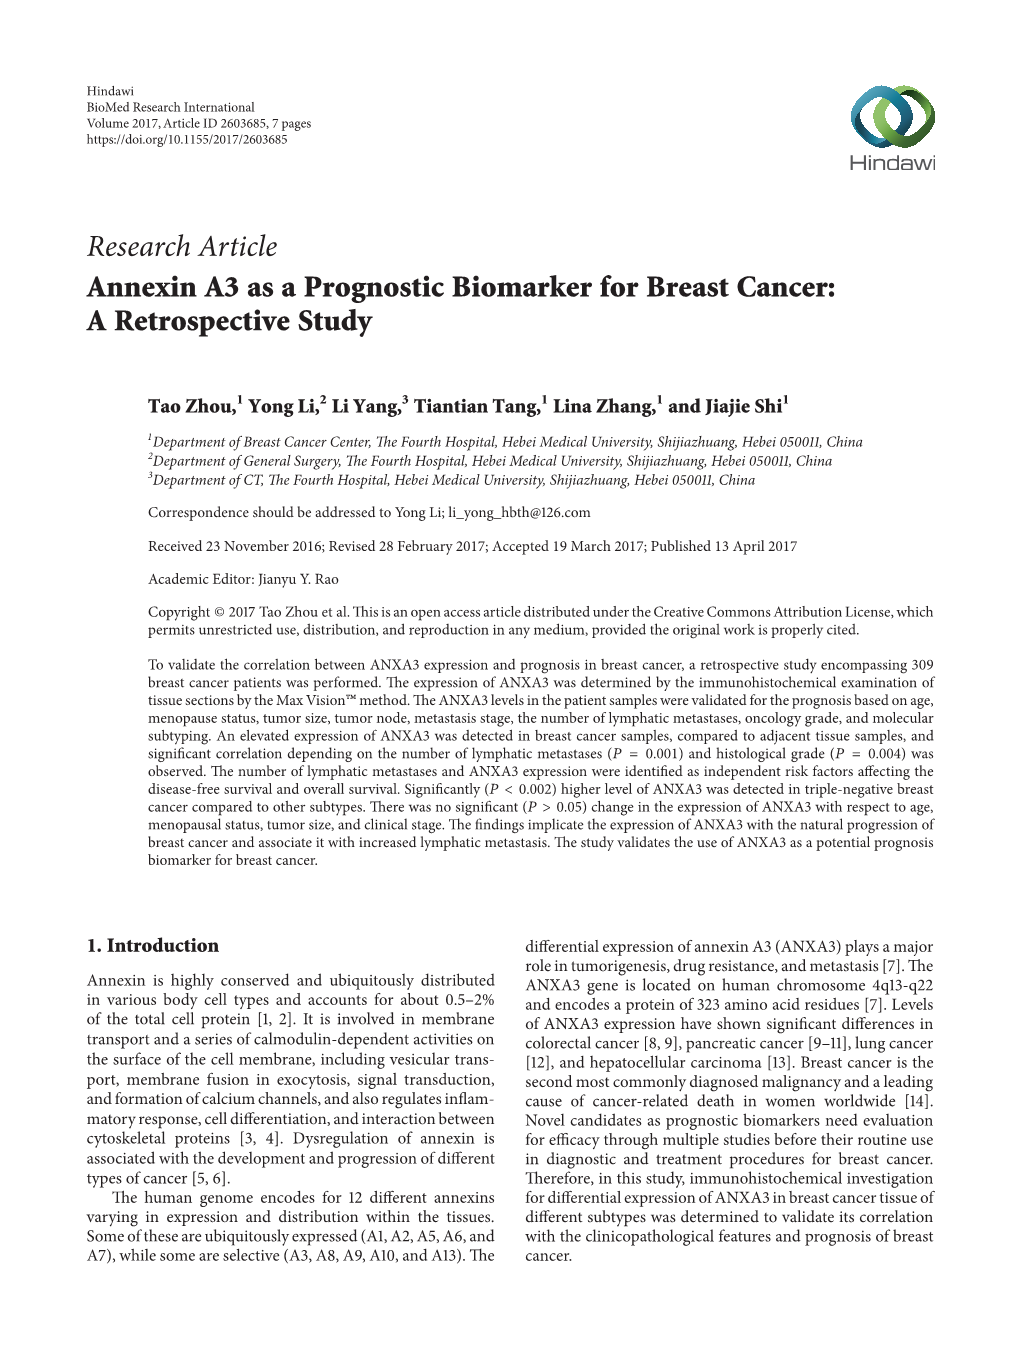 Annexin A3 As a Prognostic Biomarker for Breast Cancer: a Retrospective Study